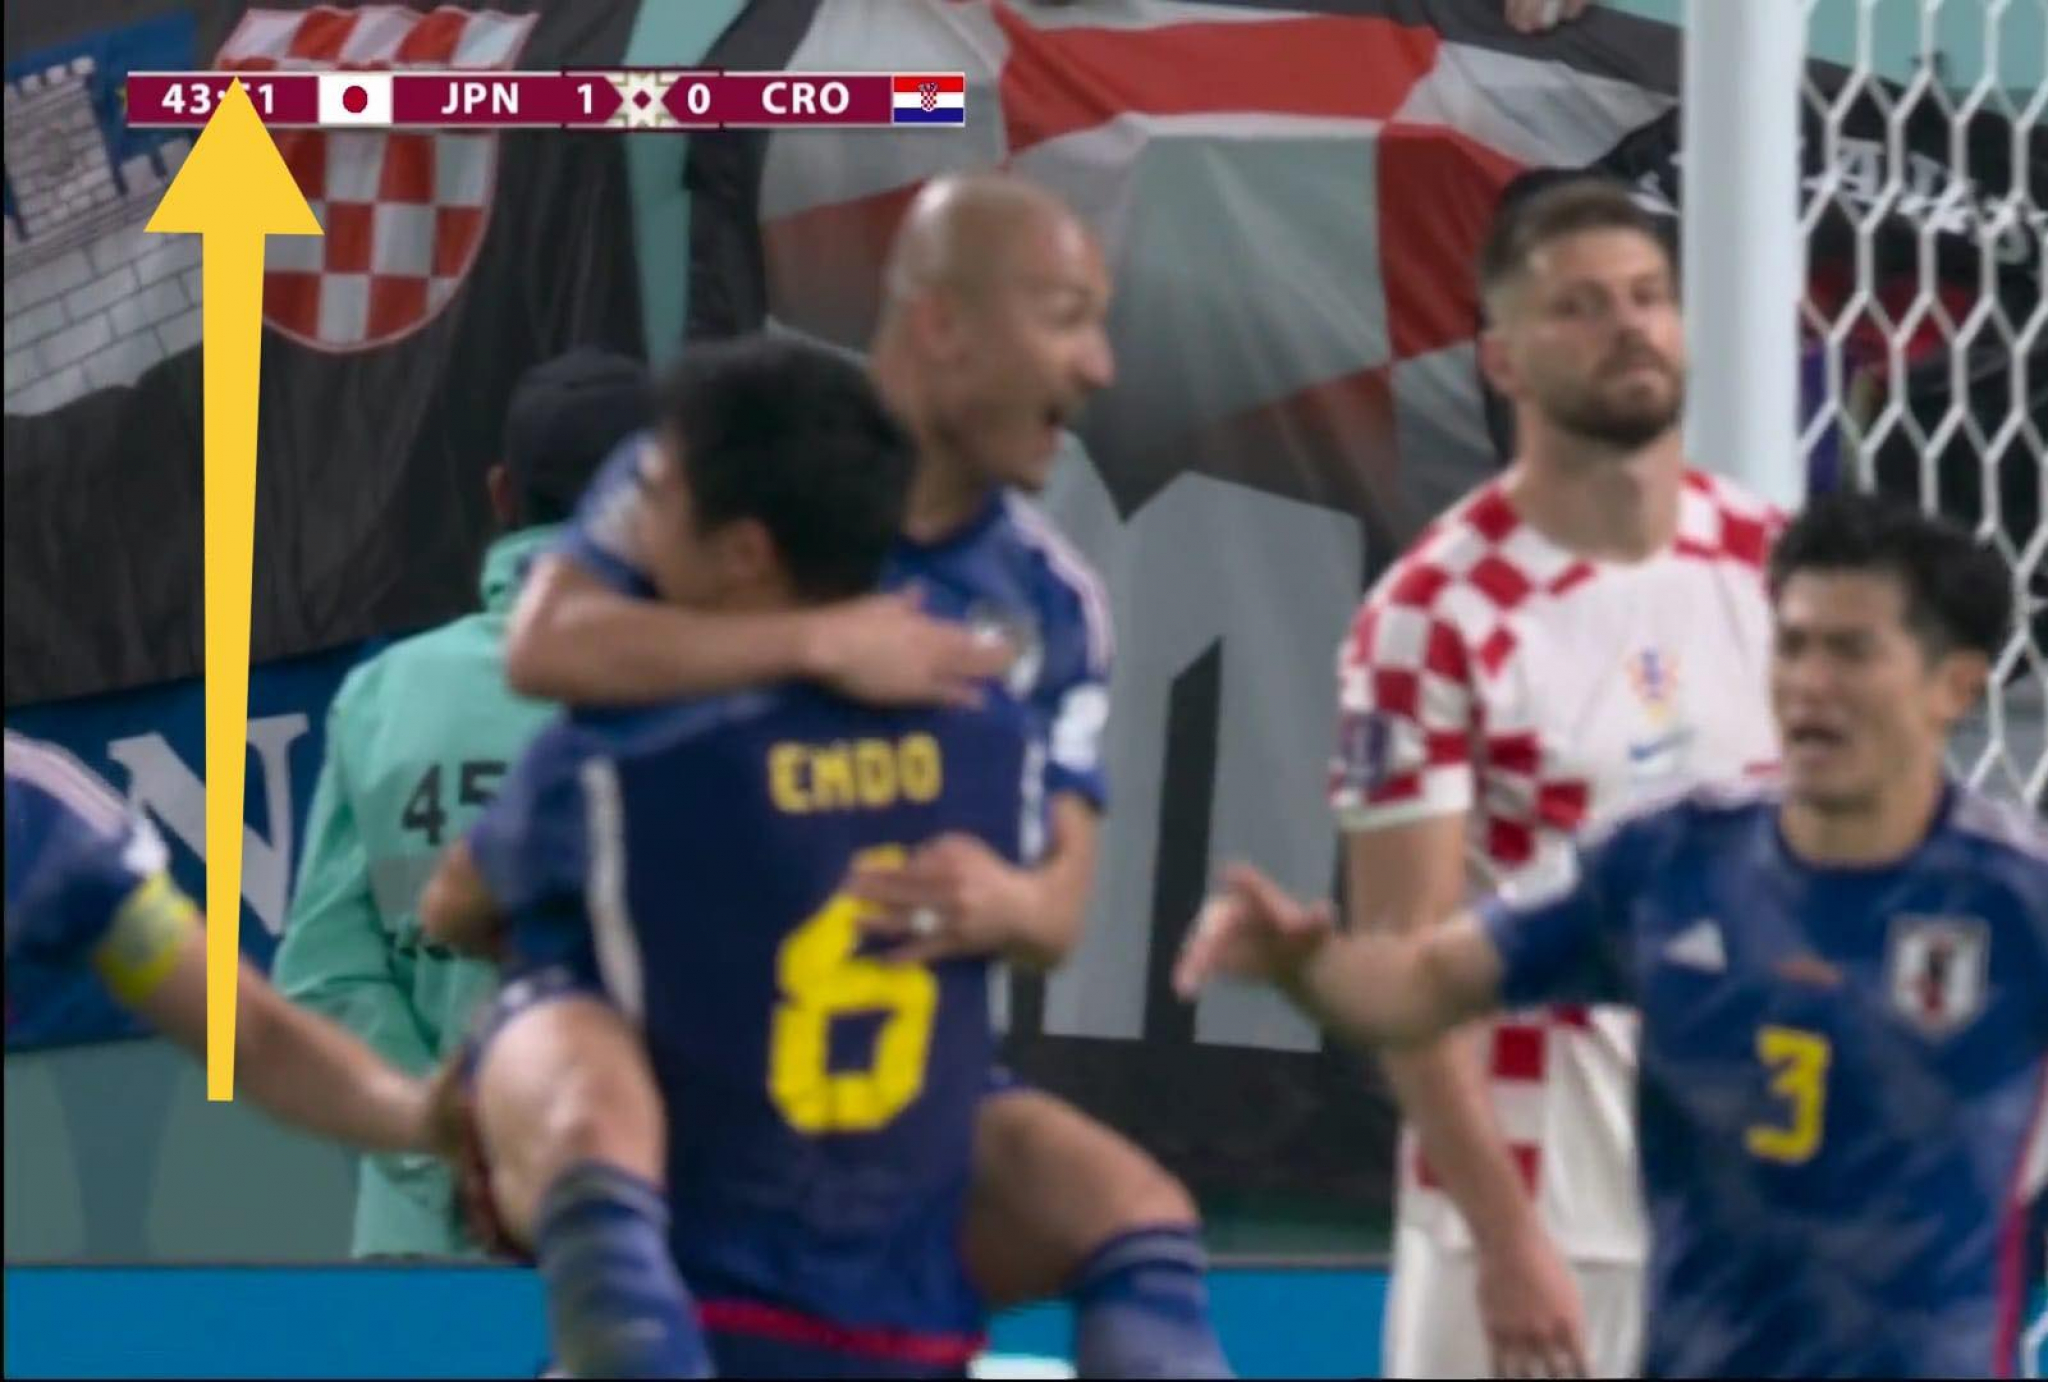 SKANDALOZNO Hrvati uz ustaška obeležja igraju meč sa Japanom - I opet nikom ništa! (FOTO)